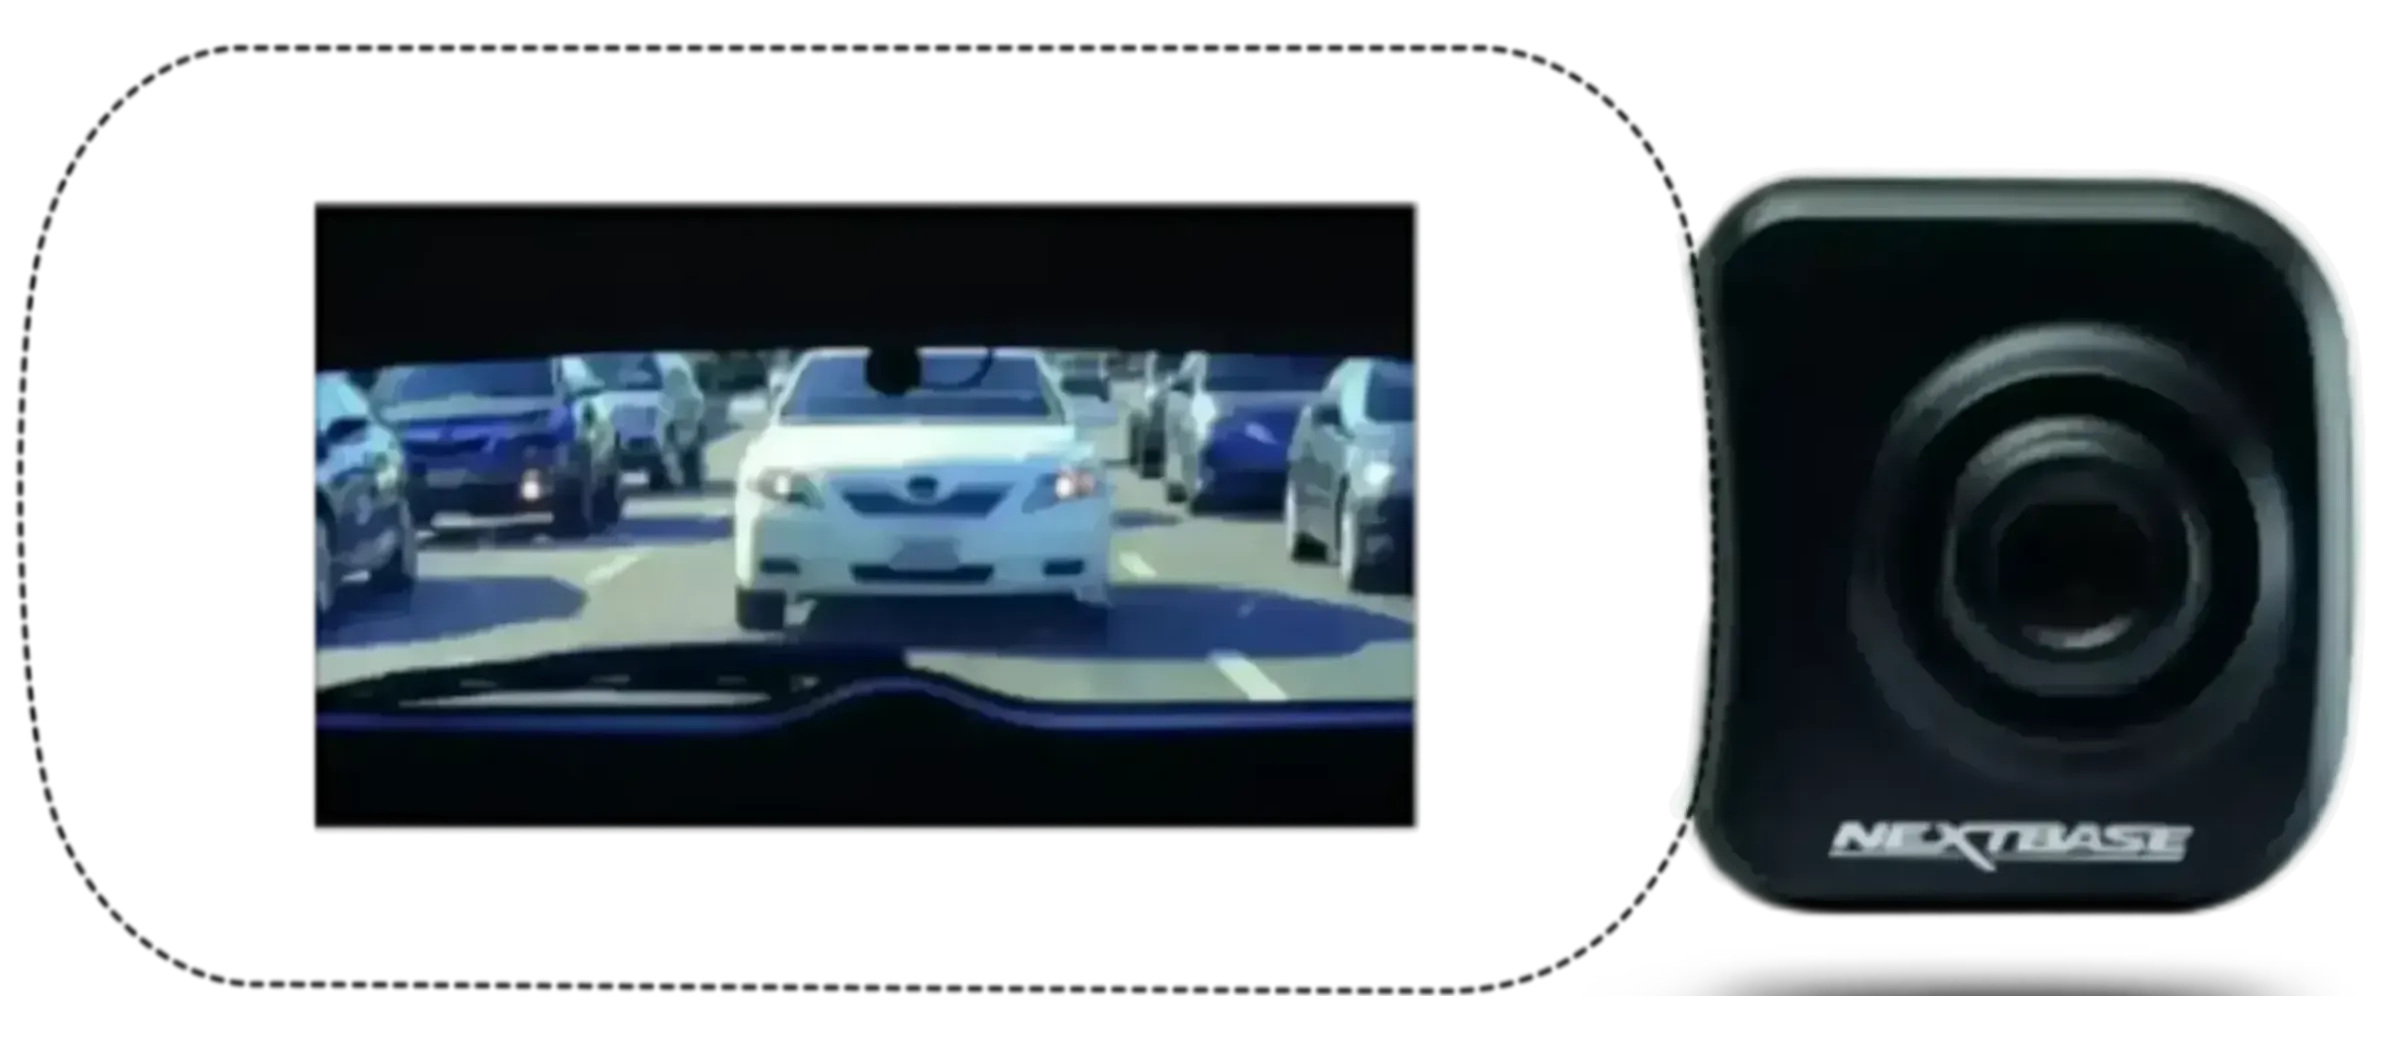 K1S - The First Front & Rear 1080p Hidden Recorder Car Dash Cam